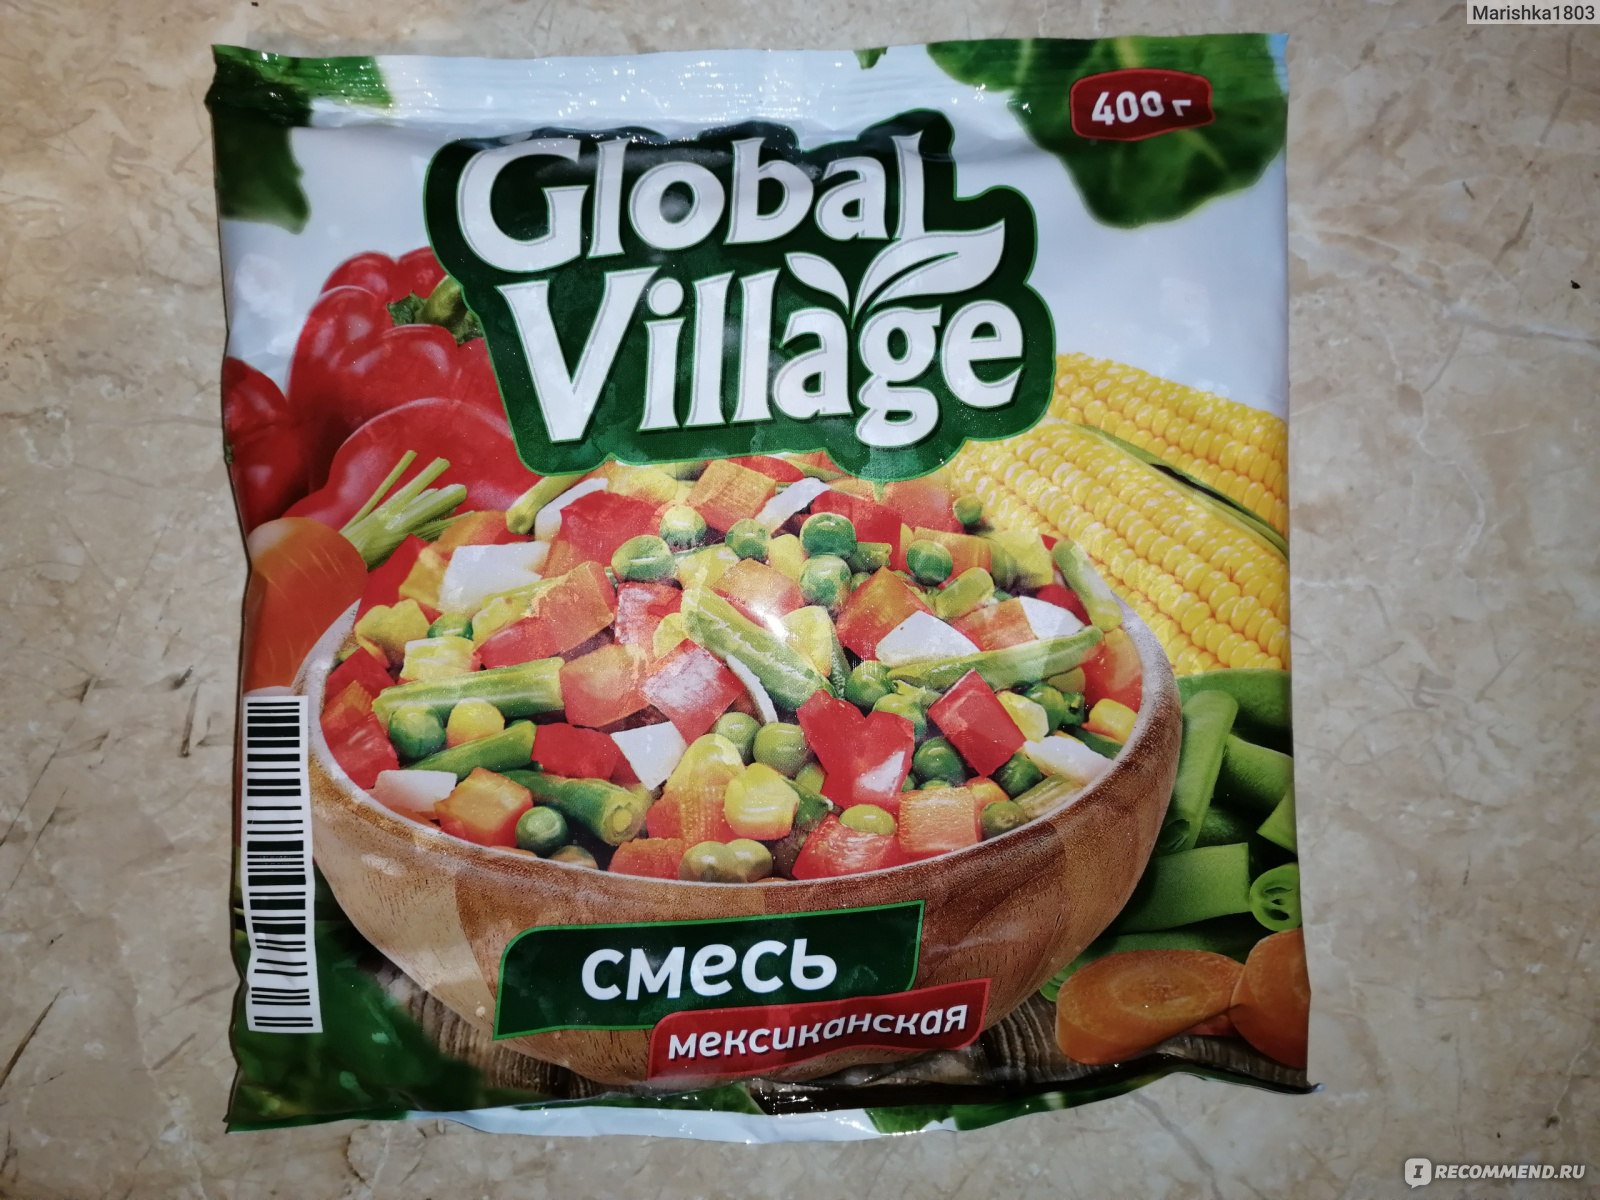 Global village овощи. Овощная смесь Глобал Вилладж 8 овощей. Мексиканская смесь овощей Global Village. Глобал Вилладж Мексиканская смесь. Смесь овощная Global Village Мексиканская 400г.